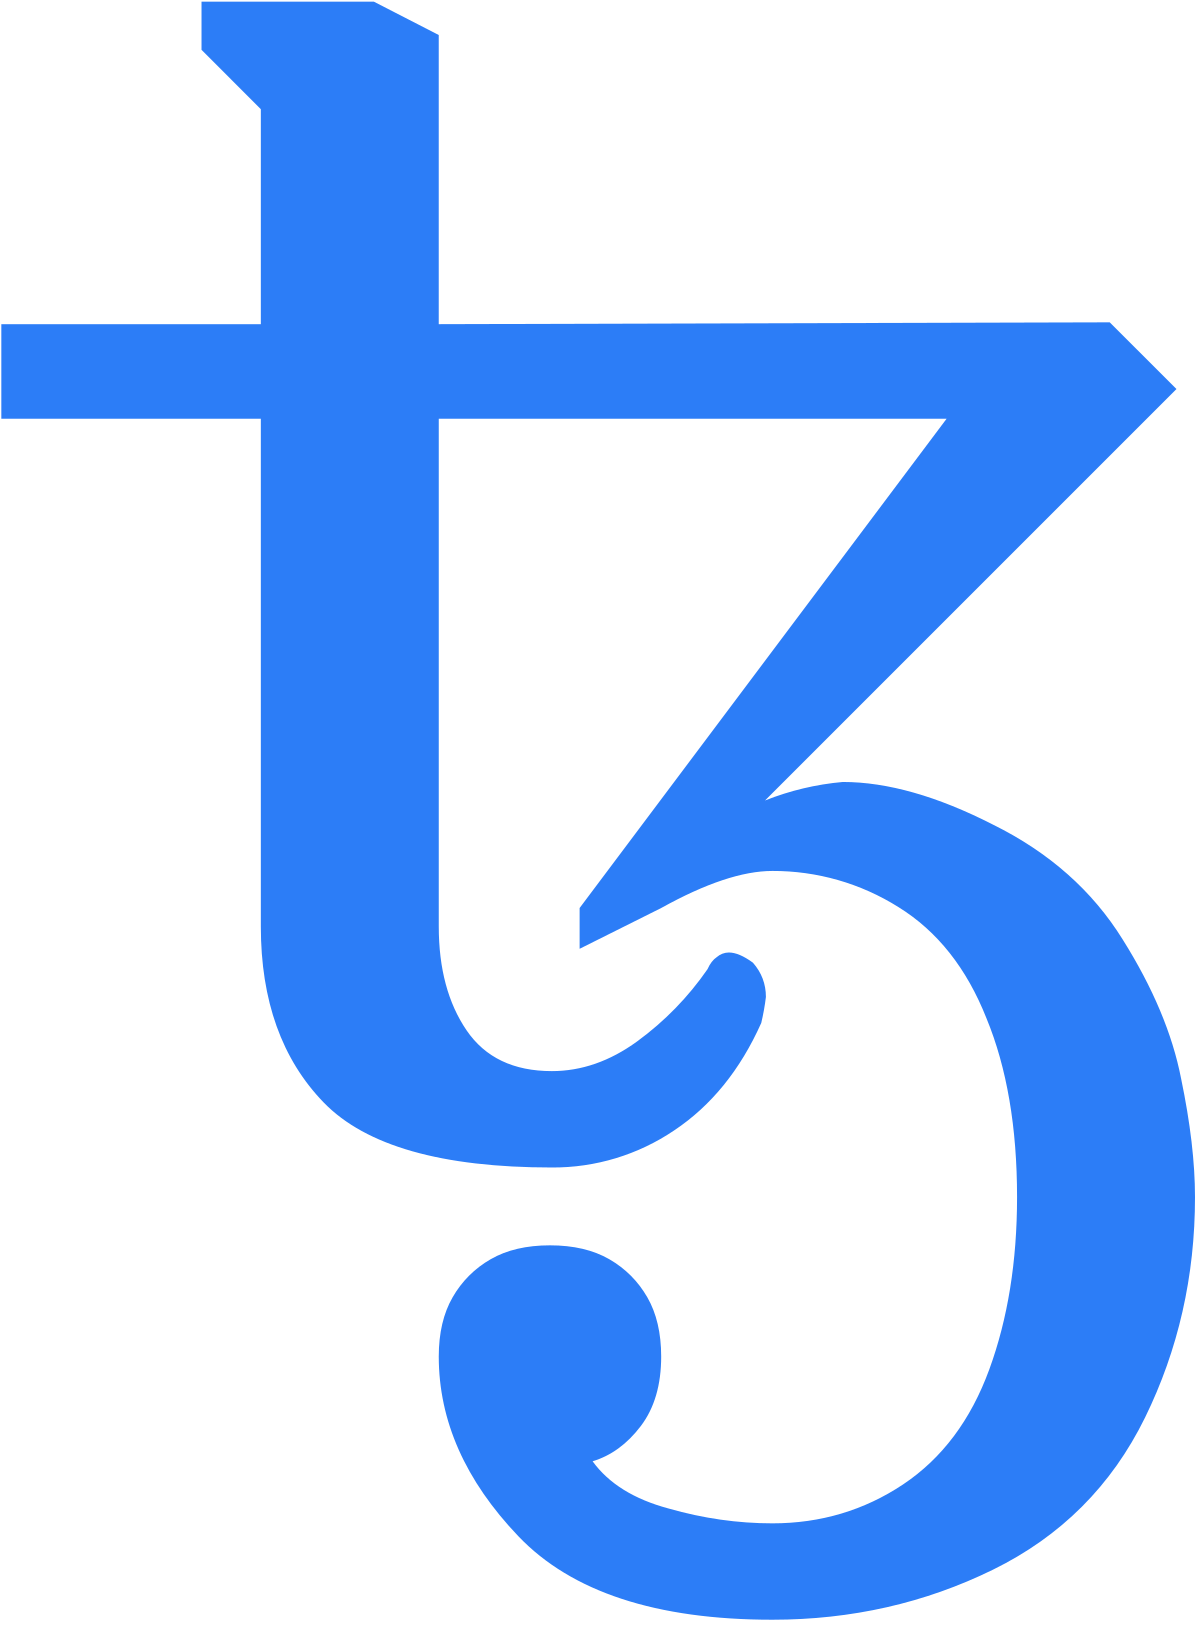 Fișier:Tezos logo.svg - Wikimedia Commons